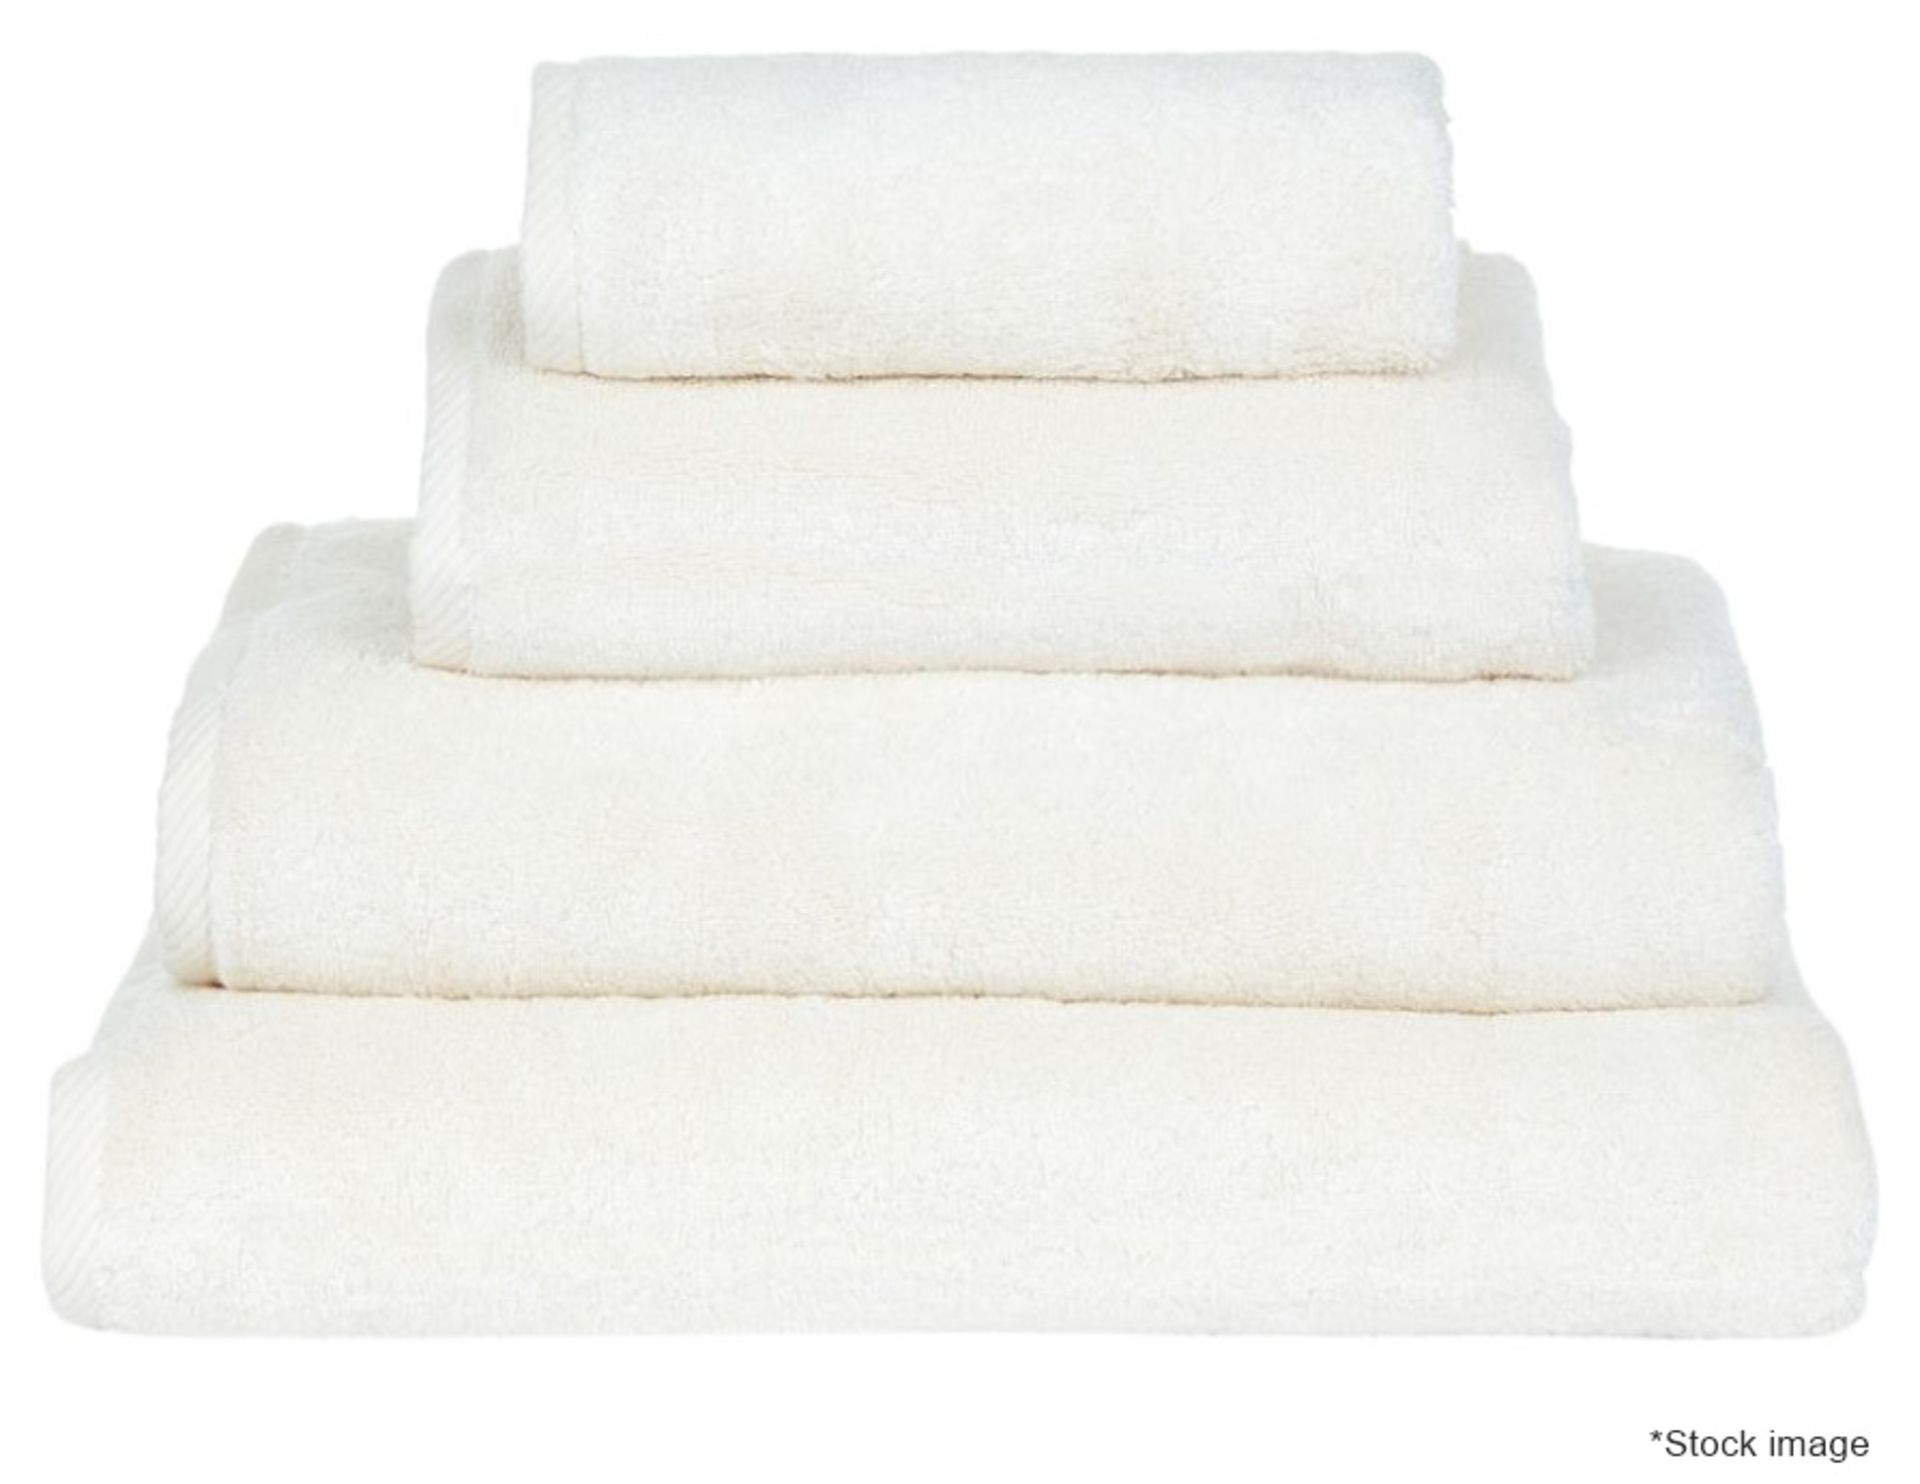 1 x HAMAM 'Glam' Terry Bath Towel, 70x140cm, 100% Hydrocotton - White - Original Price £115.00 -